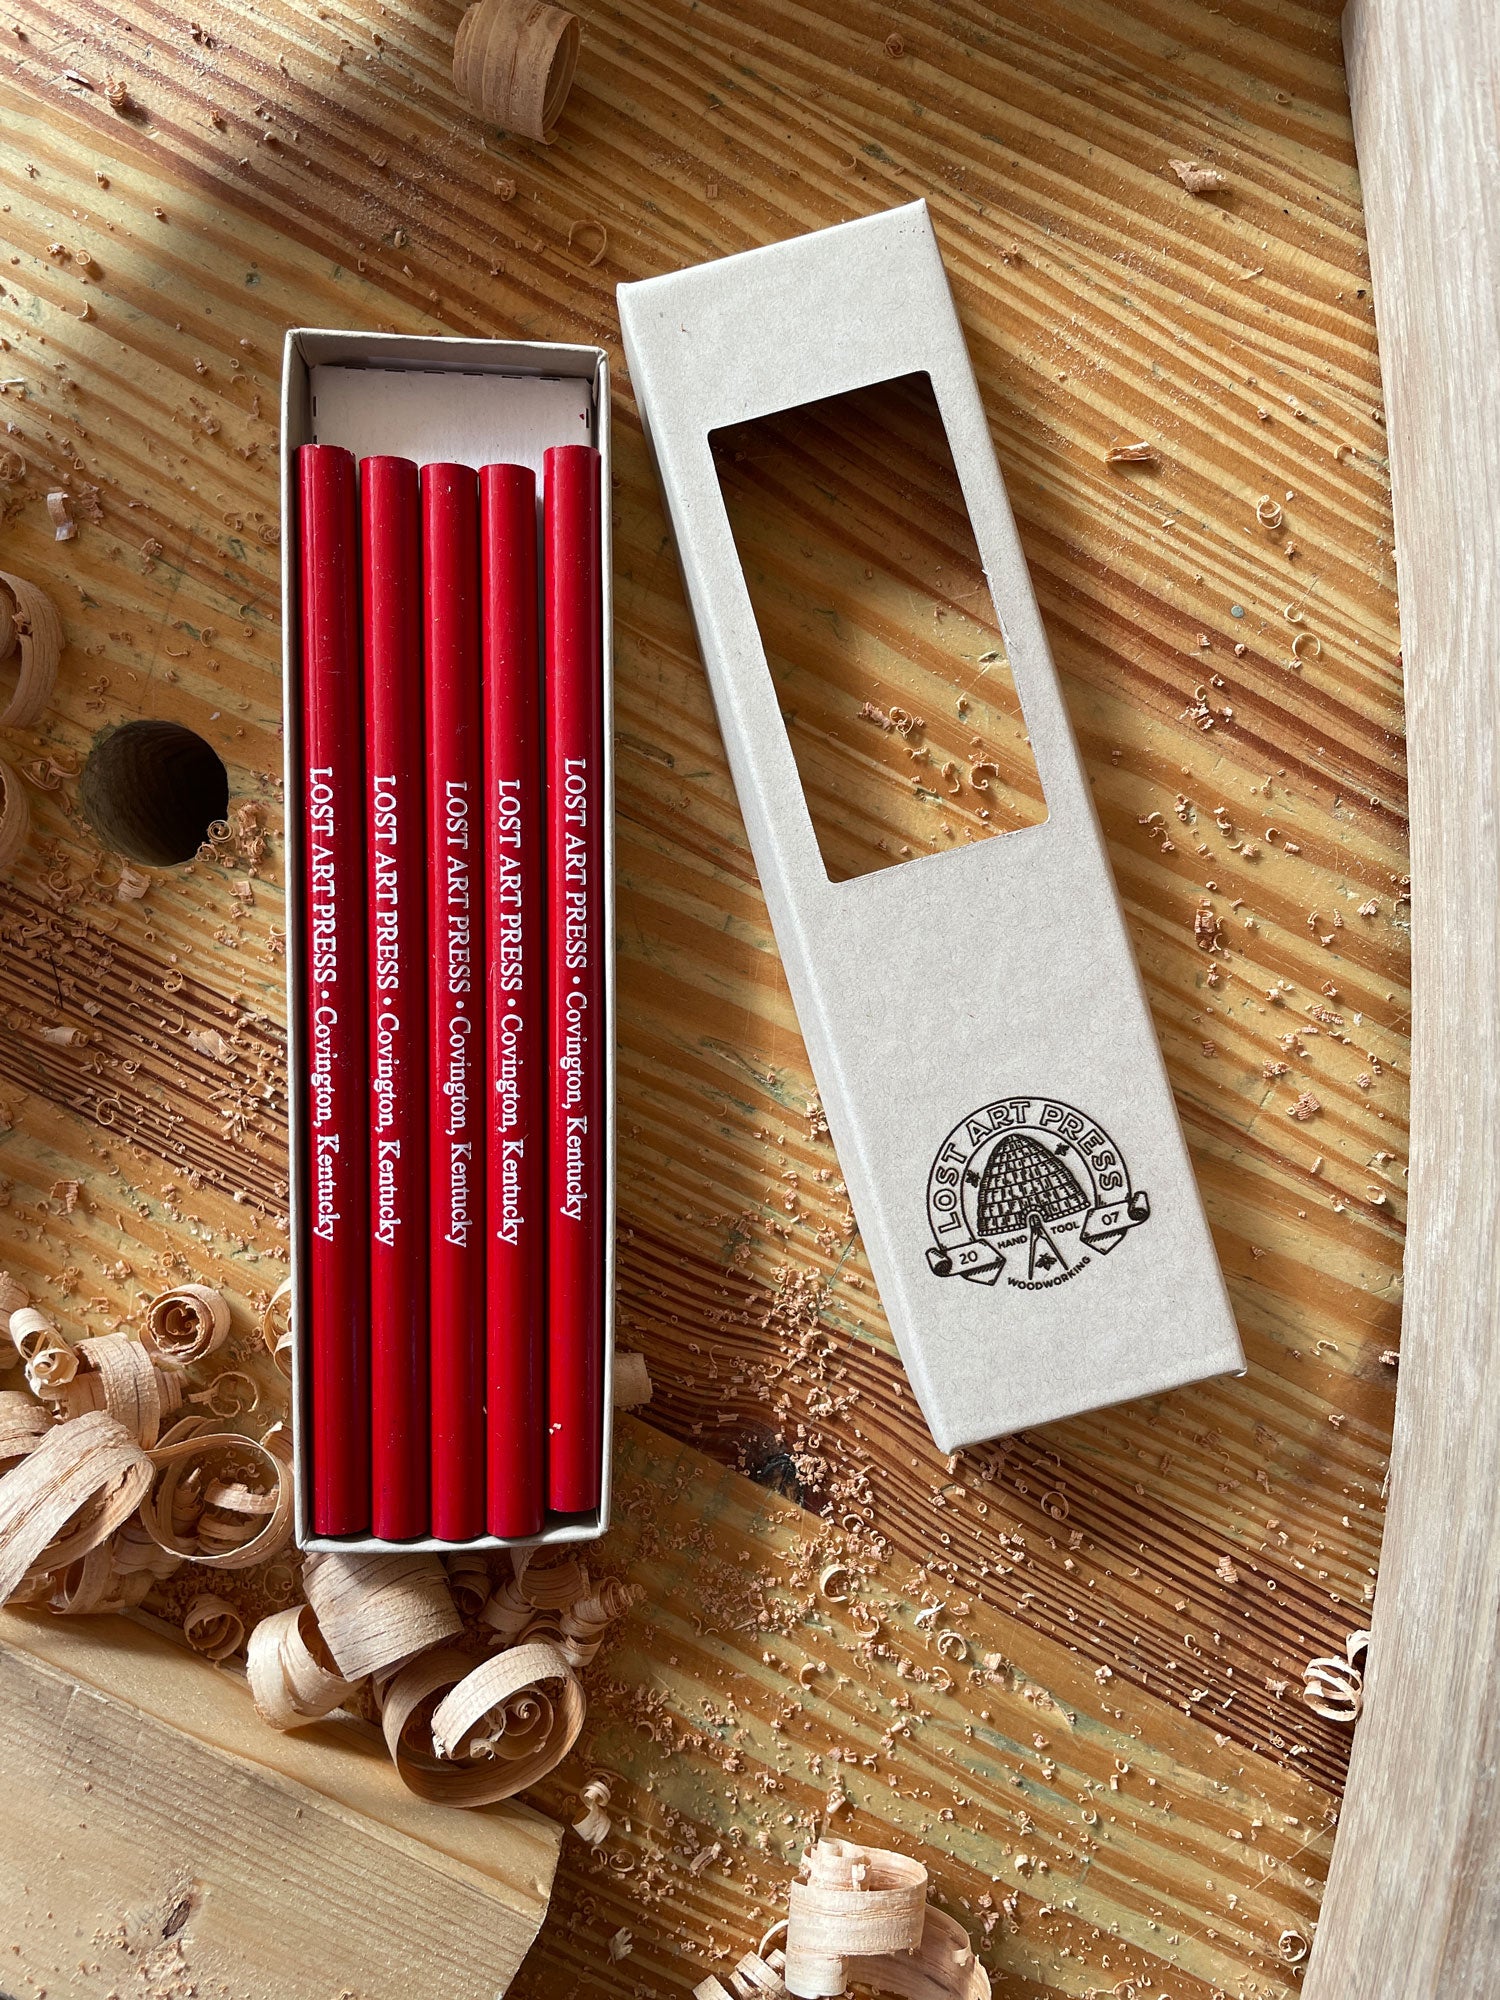 Two Cherries Carpenter Pencils – Lost Art Press